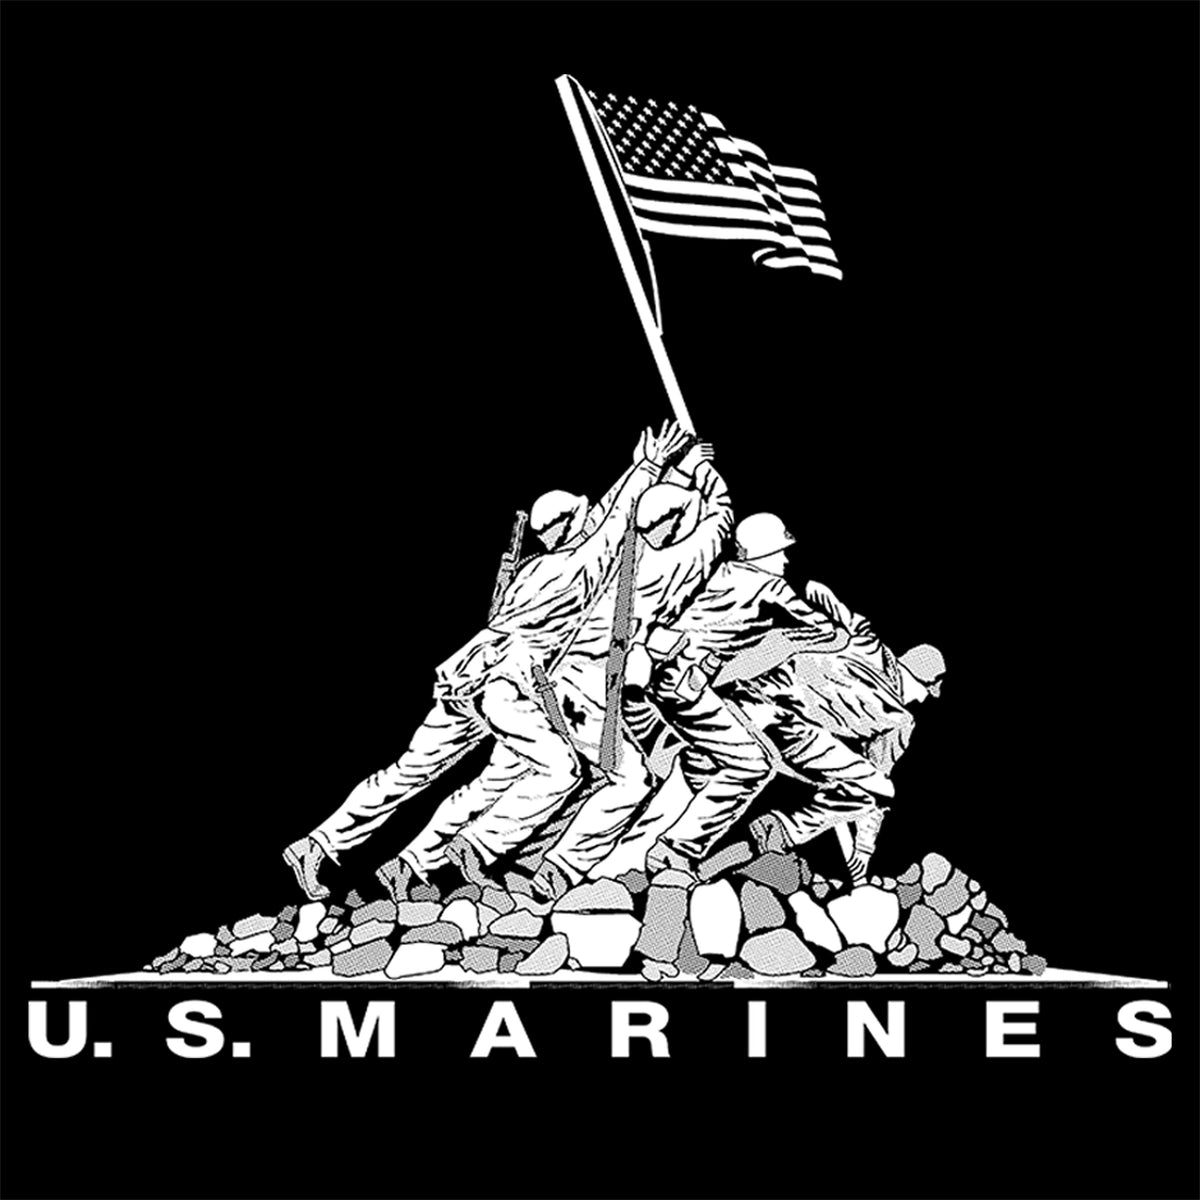 Iwo Jima U.S. Marines Tee